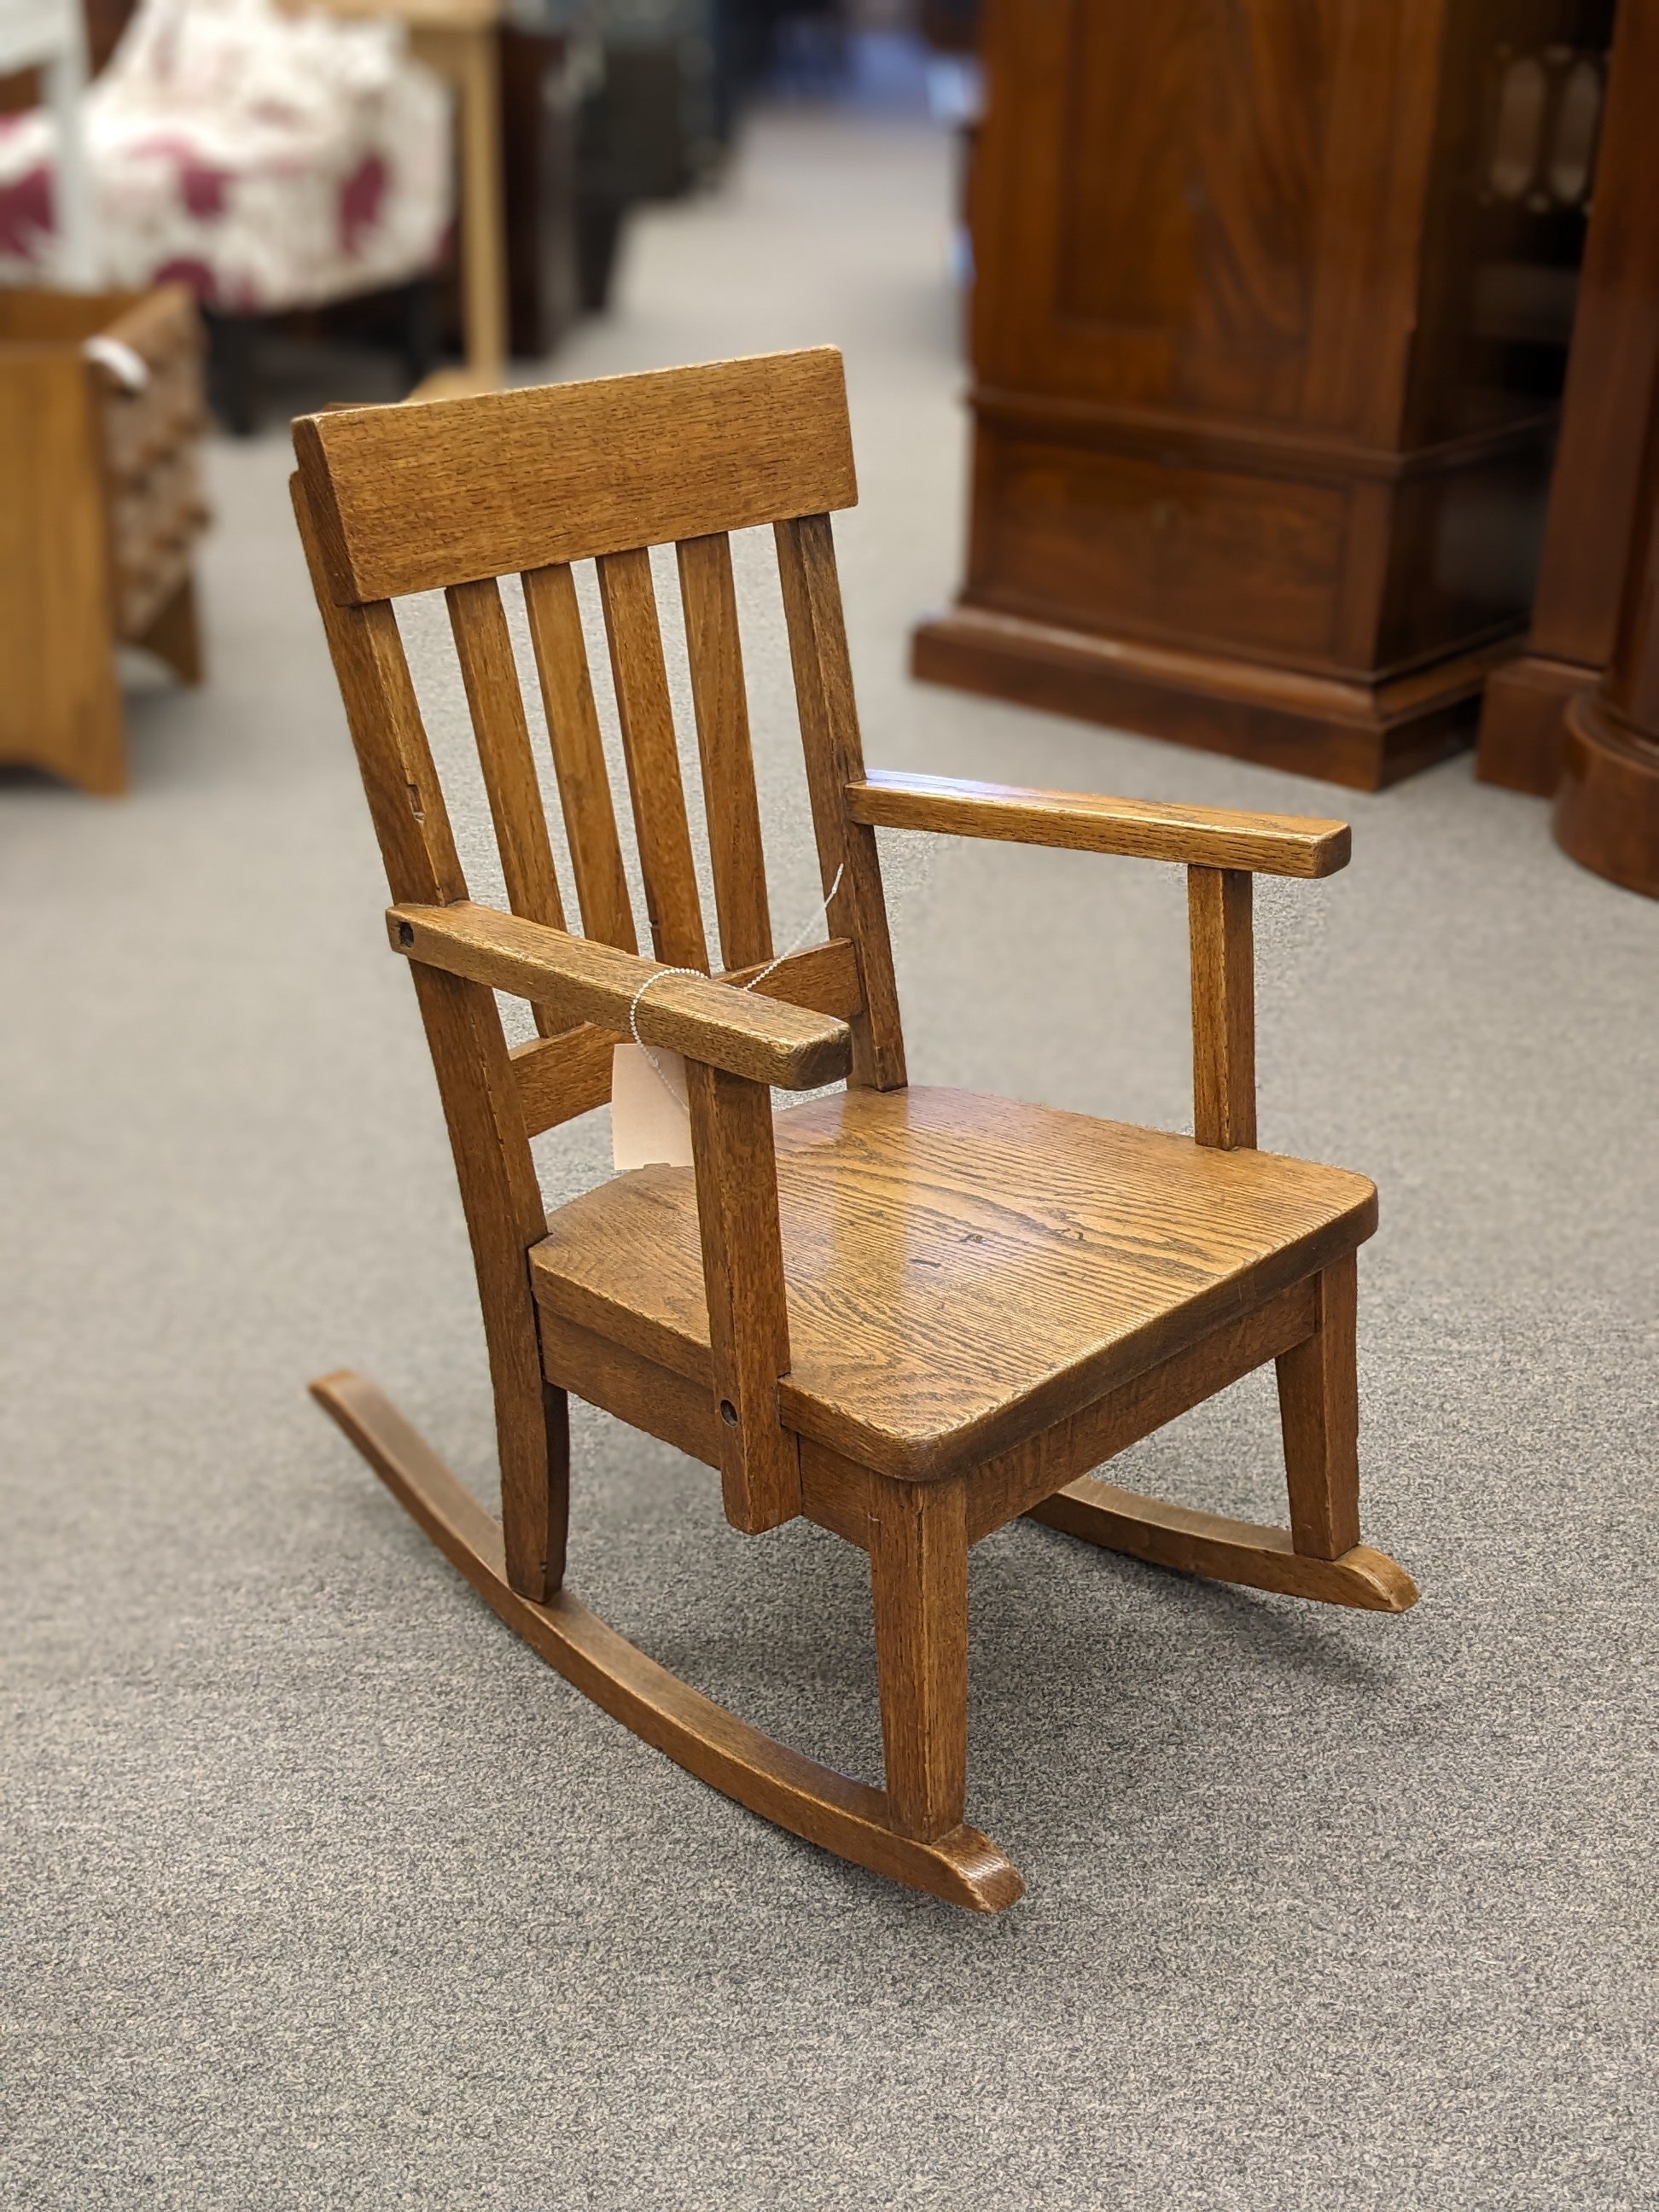 Antique Mission Child's Rocking Chair